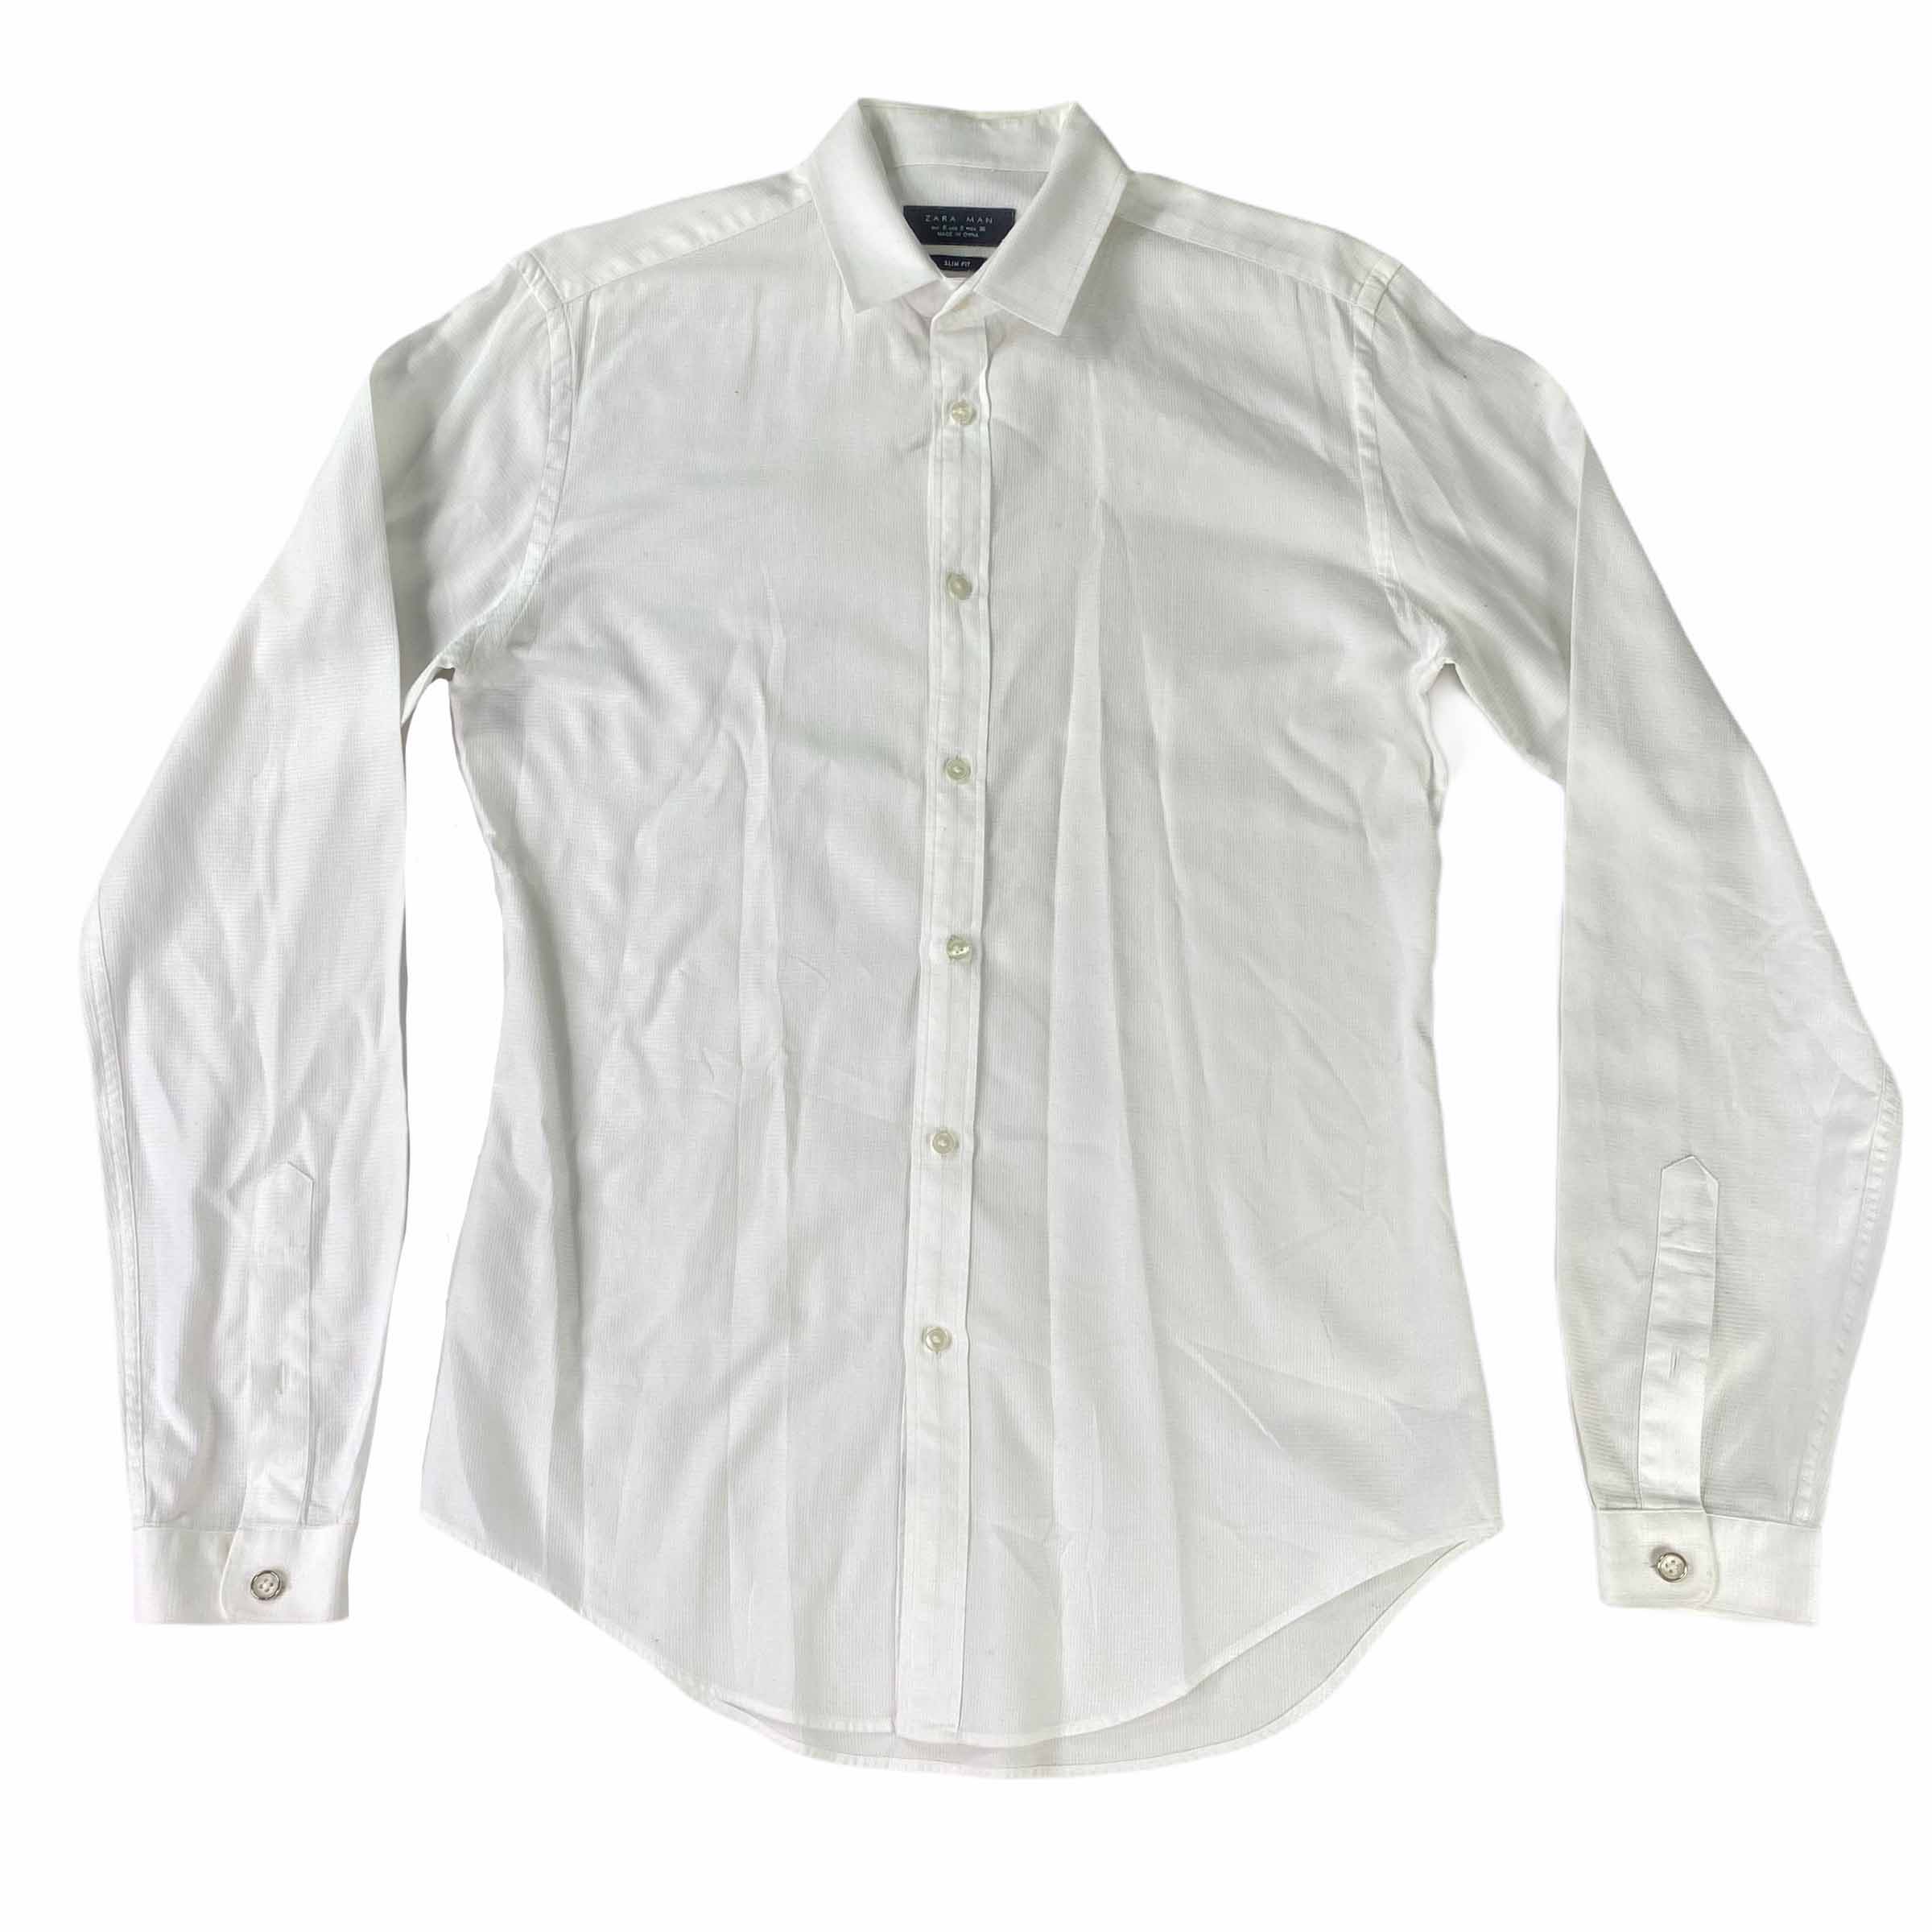 [Zara] Slim Fit White Shirt - Size S